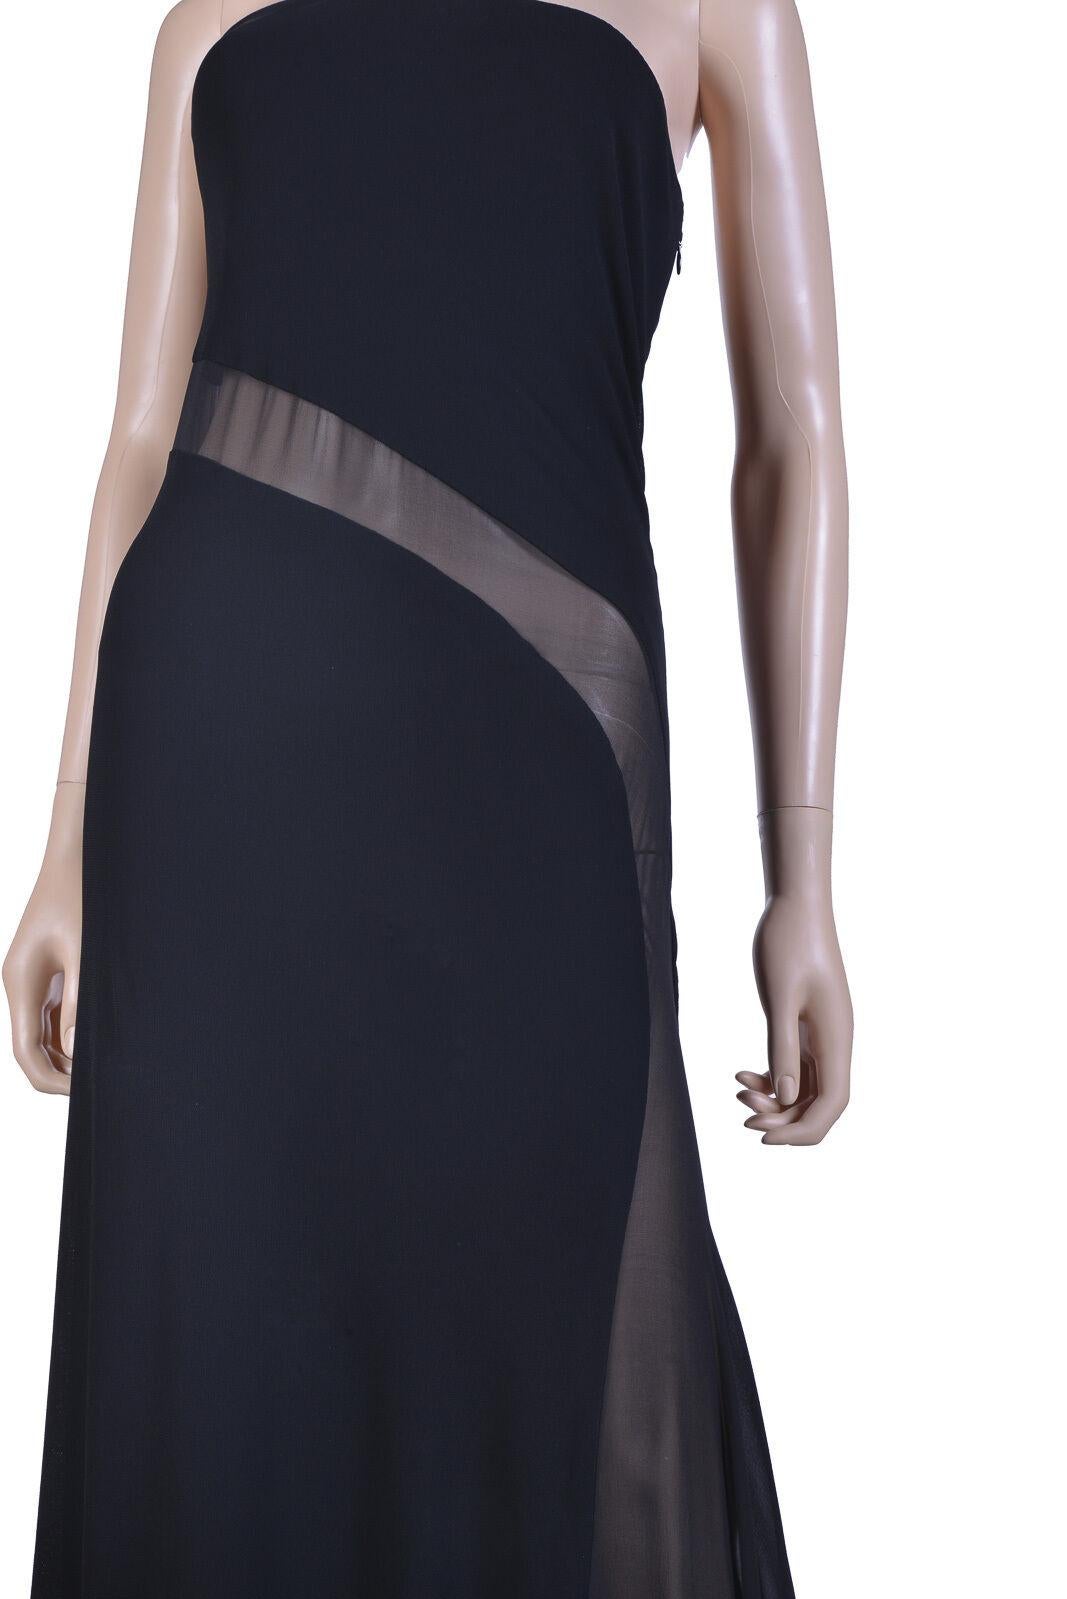 Women's VERSACE BLACK ONE SHOULDER DRESS GOWN W/SHEER CHIFFON INSERT Sz  42 - 6 For Sale